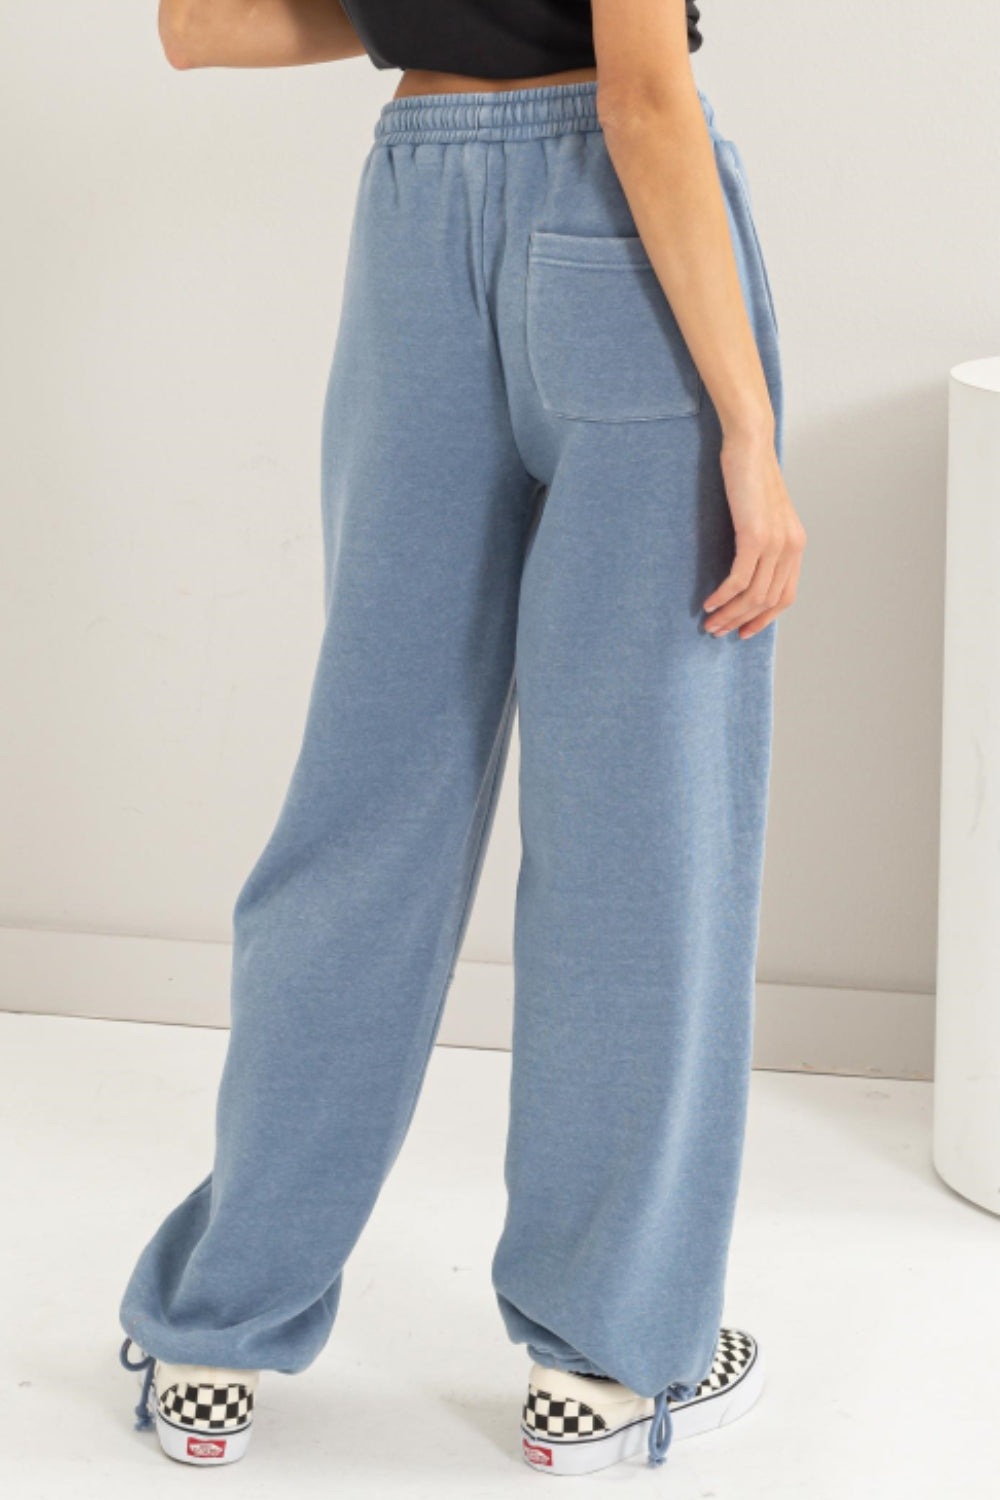 Women's Sky Blue Stitch Drawstring Sweatpants with Pockets